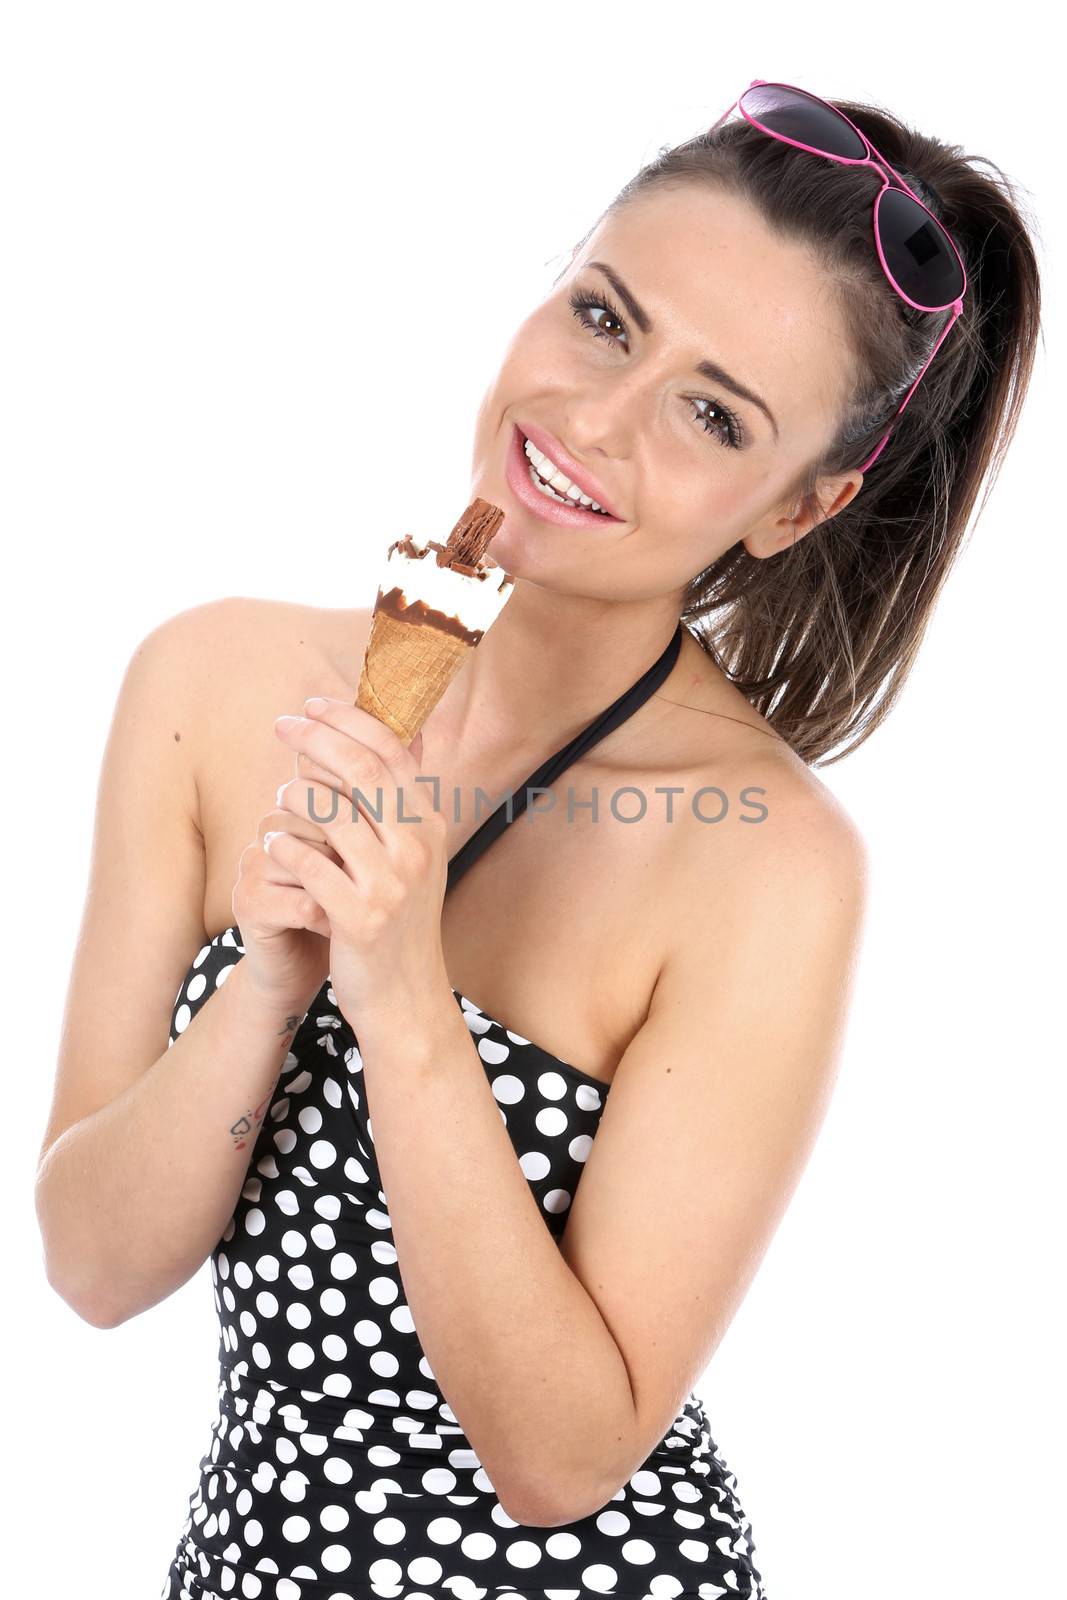 Model Released. Woman Eating Ice Cream Cornet by Whiteboxmedia